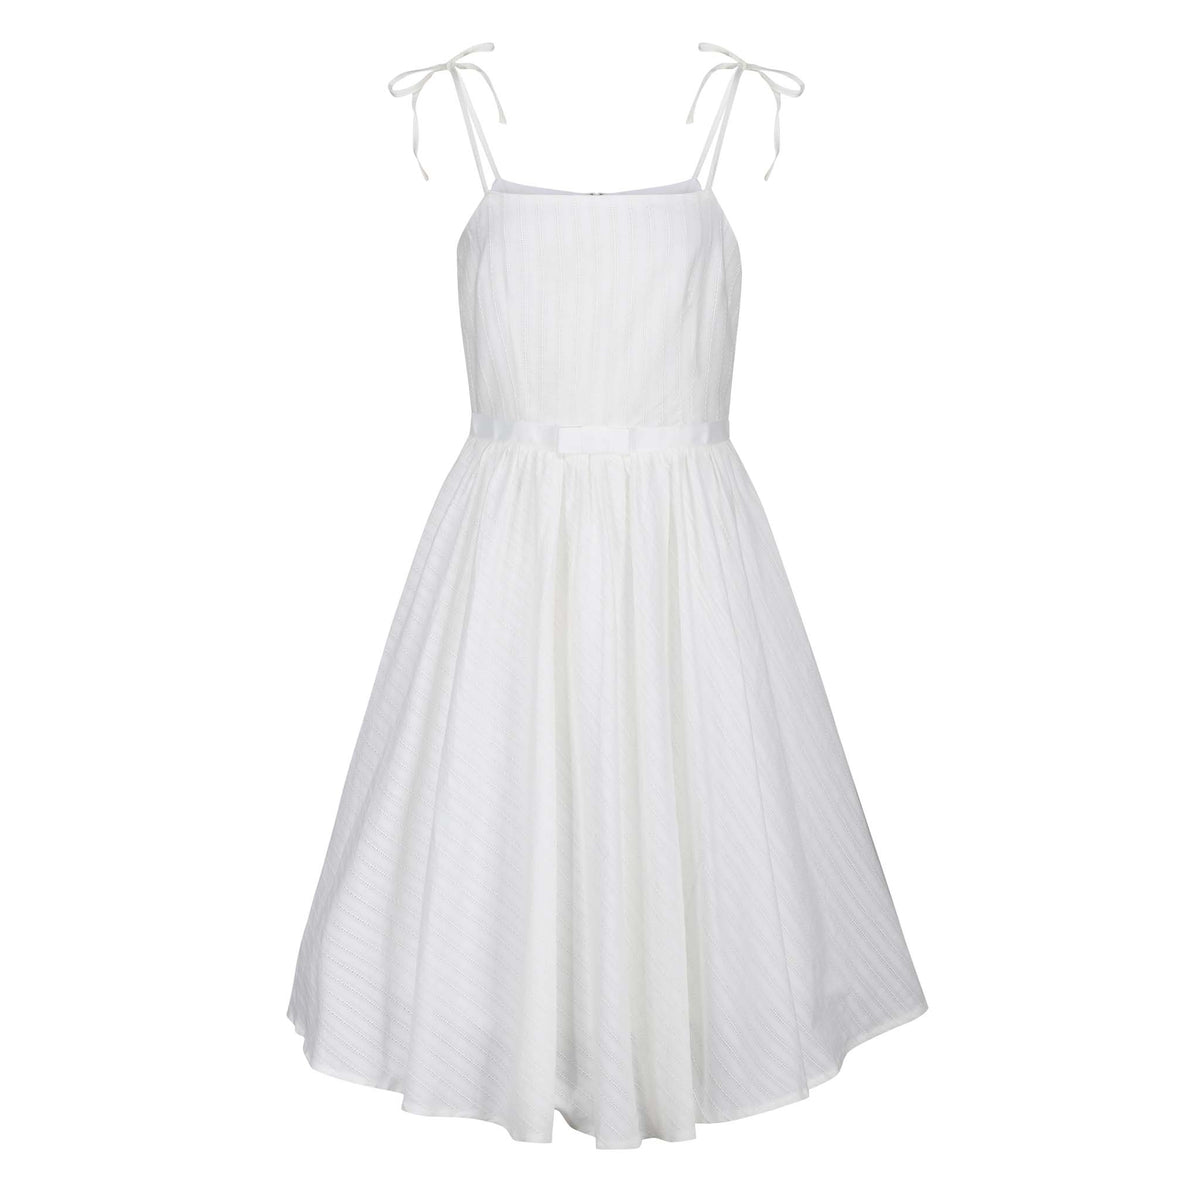 Rockabilly Dresses - Classic 50s Style | Pretty Kitty Fashion Page 3